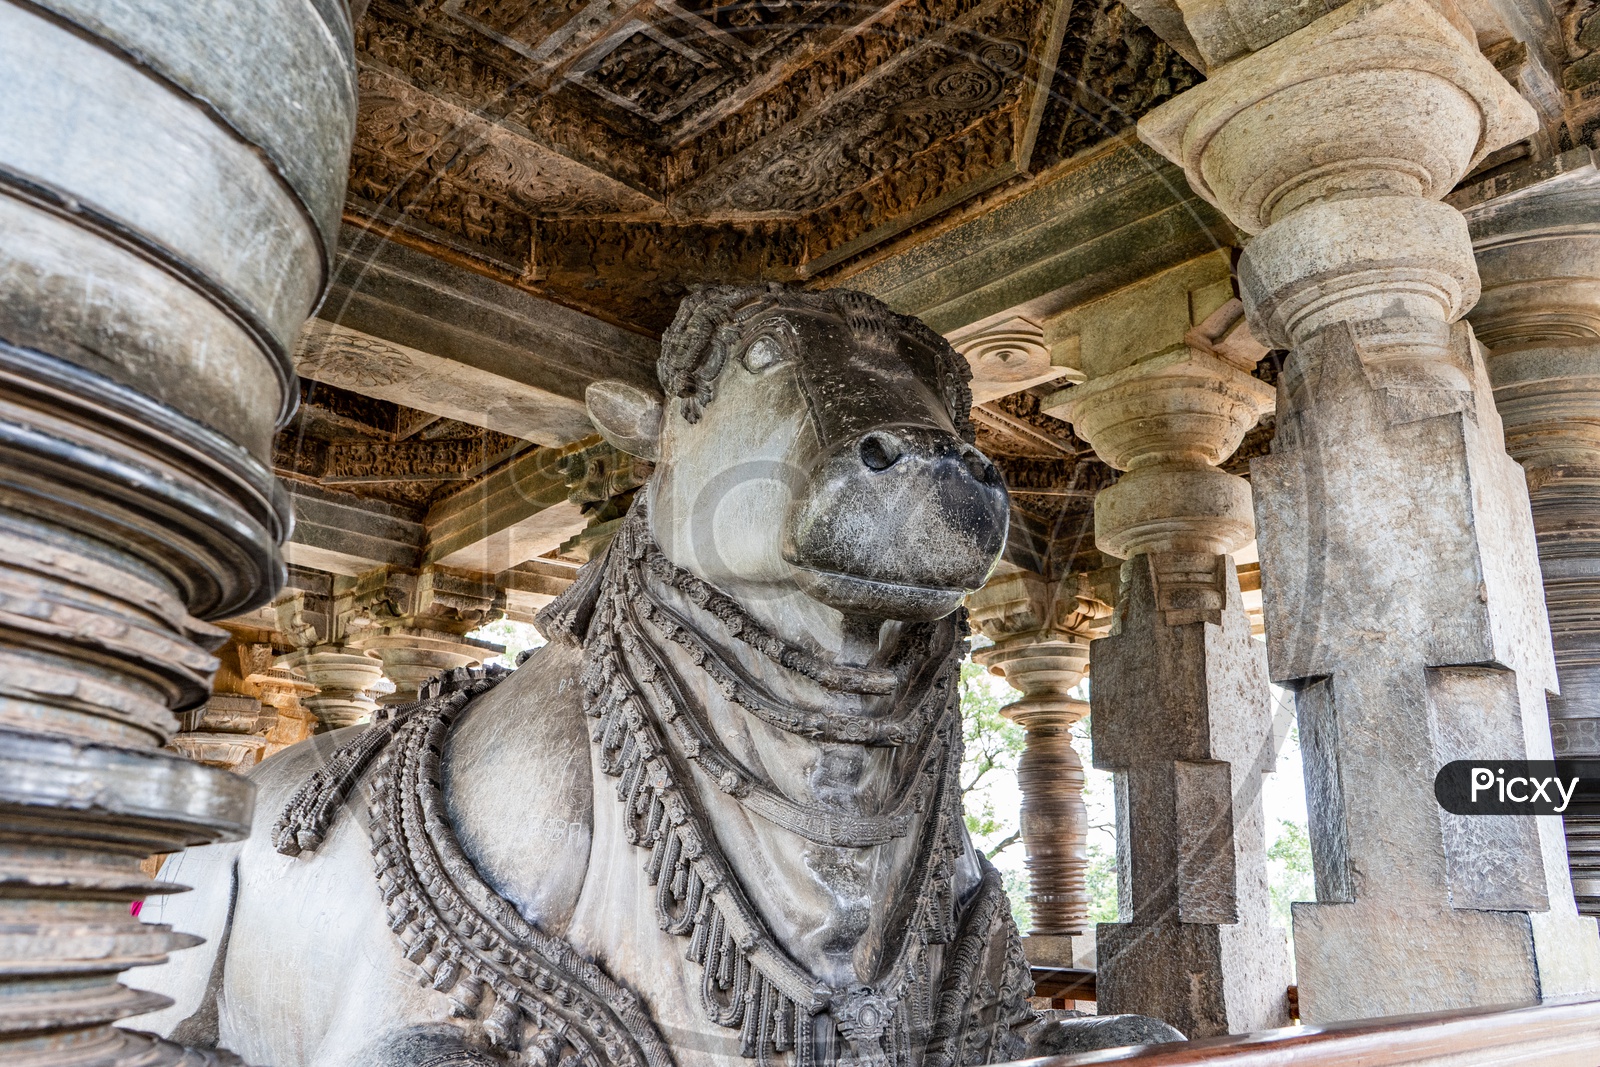 Stone Crafted Big Nandhi Or Bull Statue In Ancient Hindu Temple Of Chennakeshava Temple In Belur , Karnataka